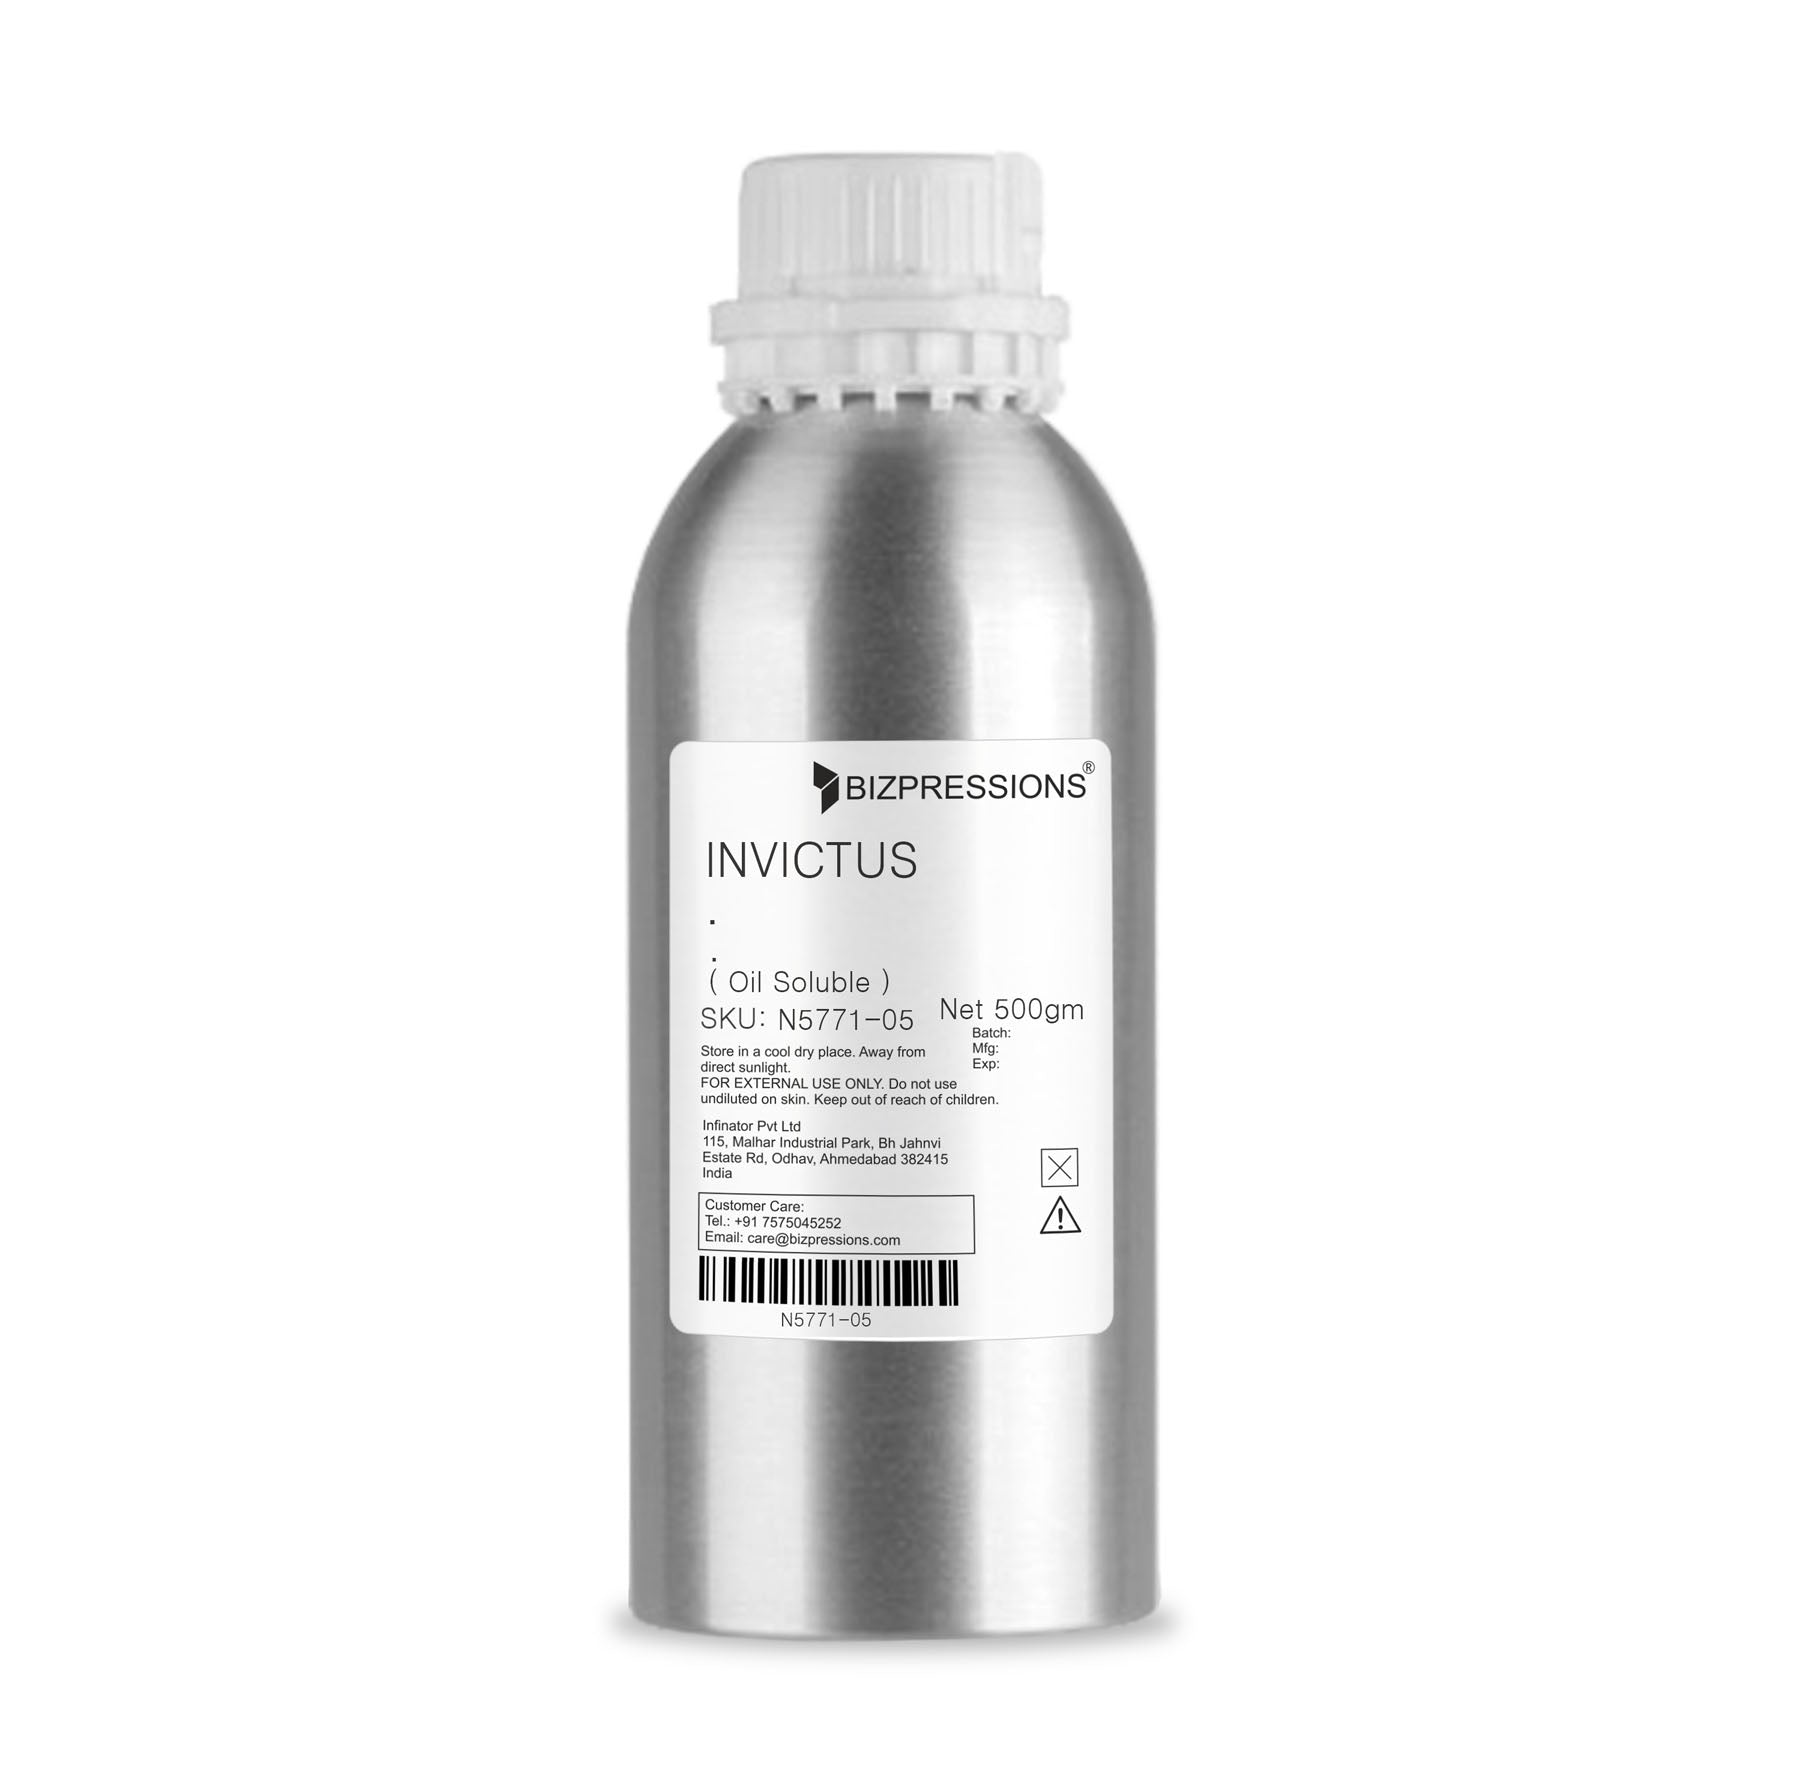 INVICTUS - Fragrance ( Oil Soluble ) - 500 gm